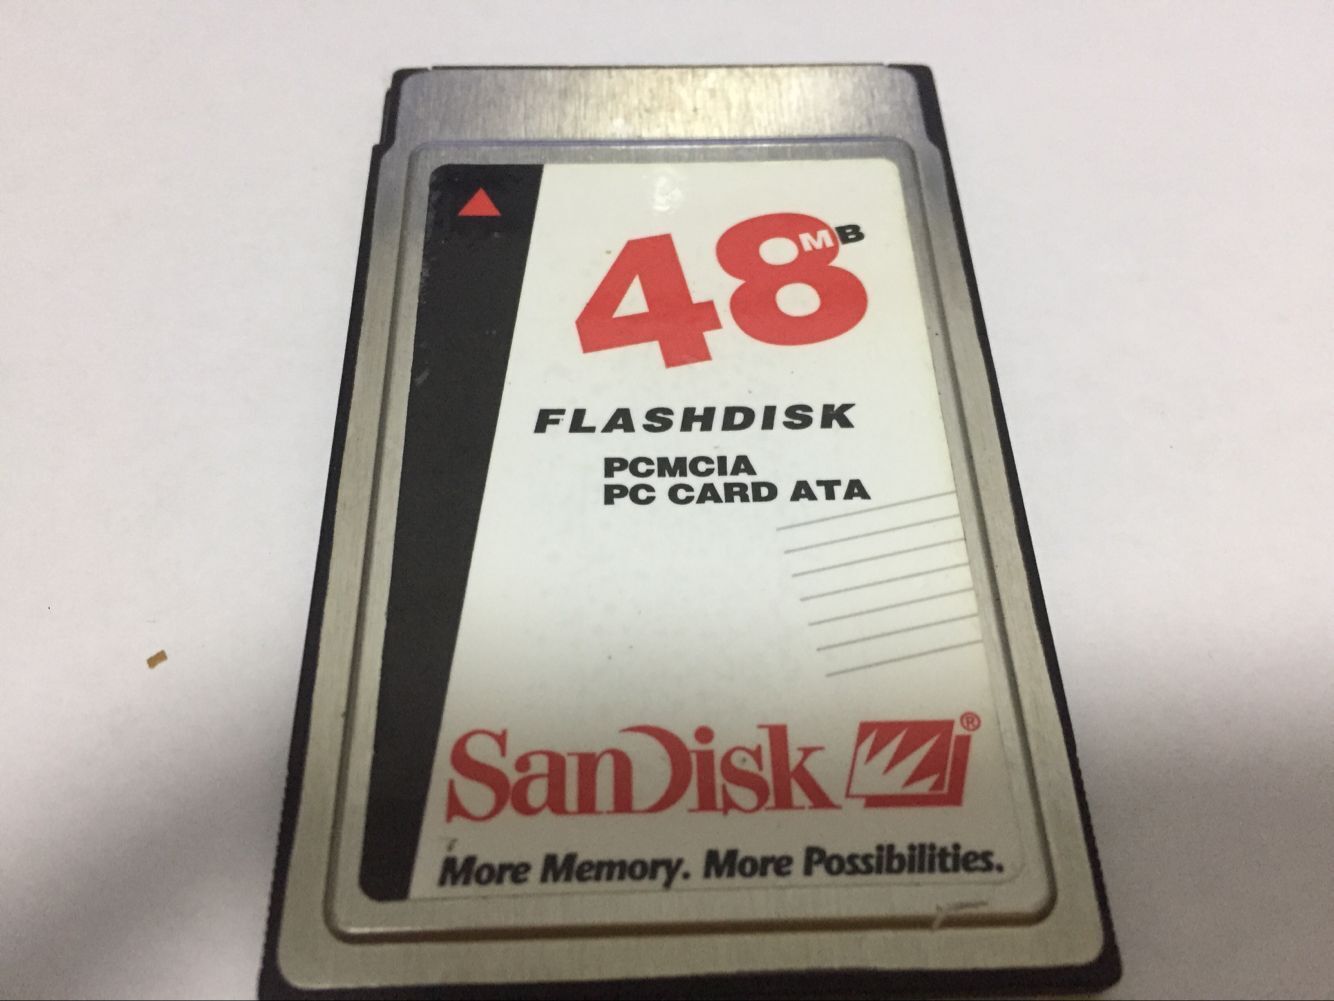 Sandisk 48MB FLASHDISK  PCMCIA PC CARD ATA FLASH CARD